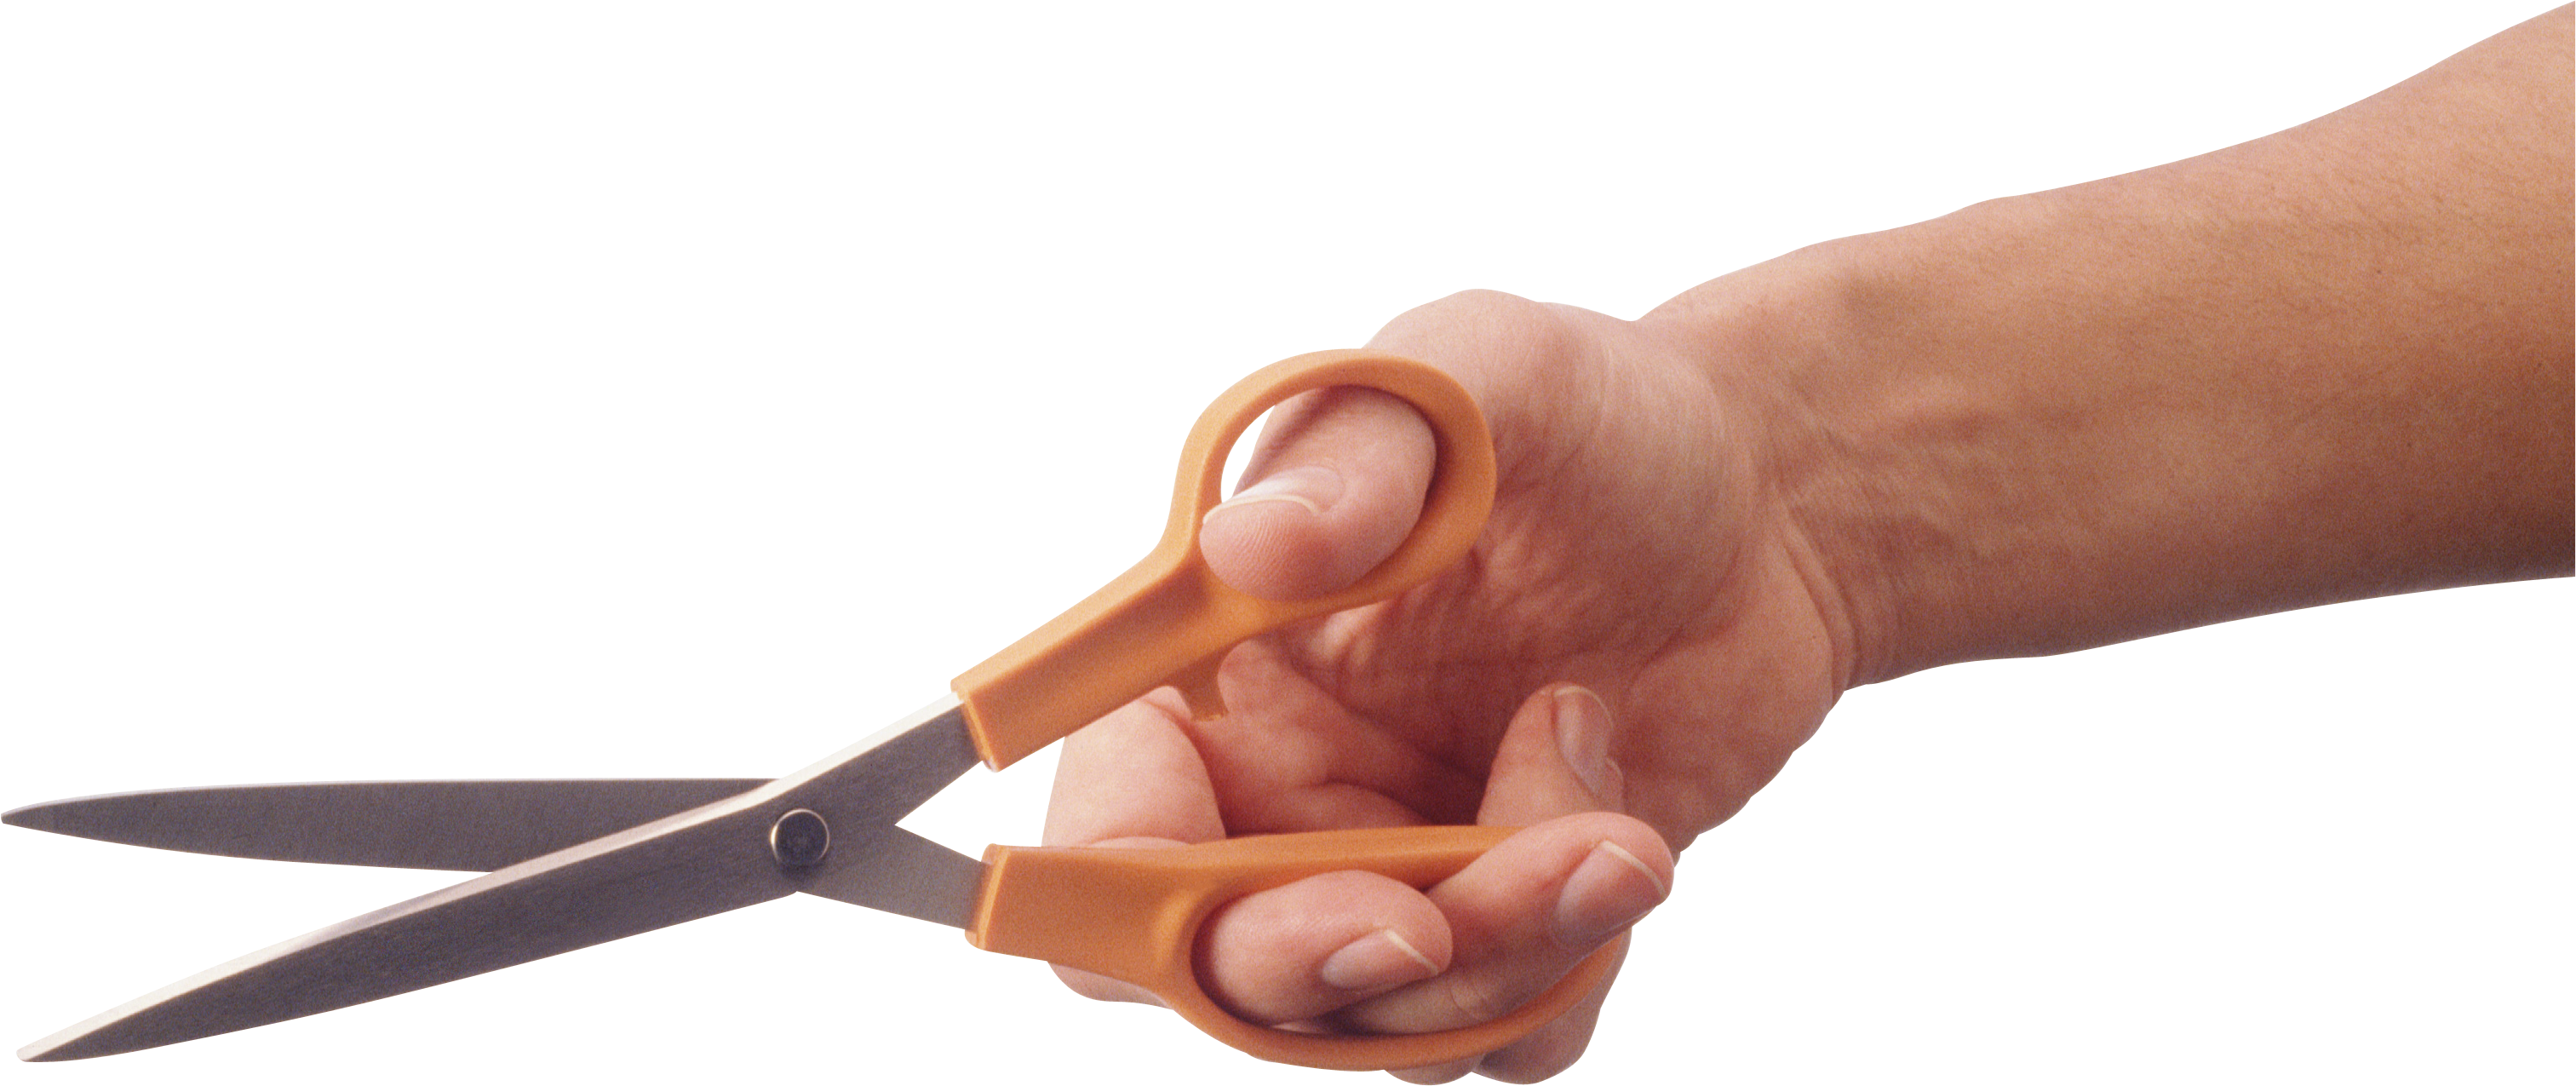 clipart scissors hand